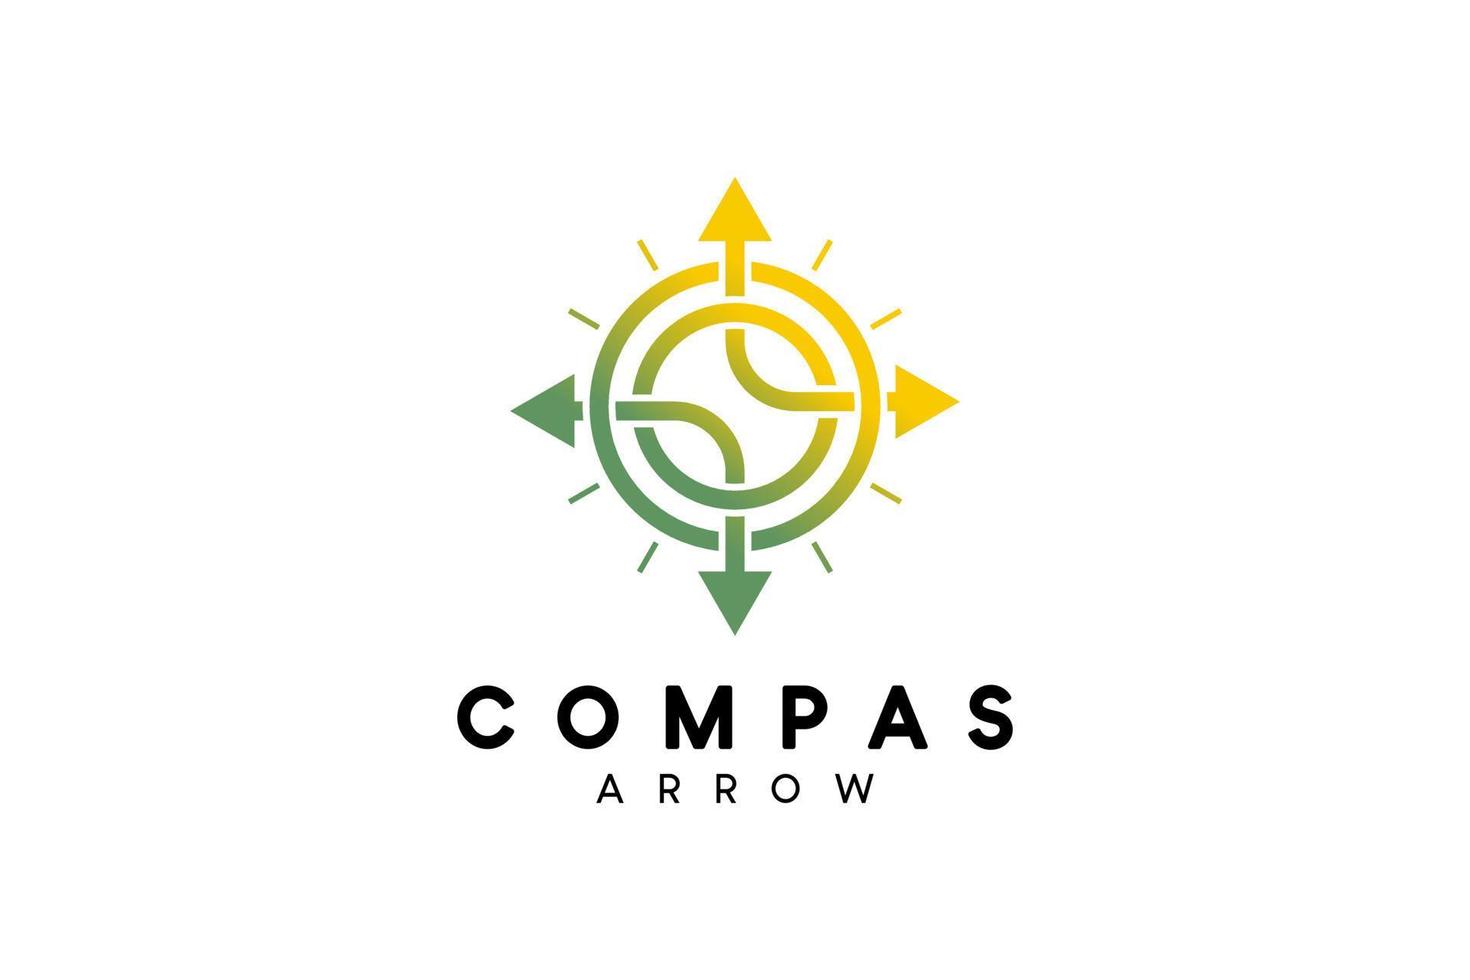 Compass logo design with modern line art concept vector